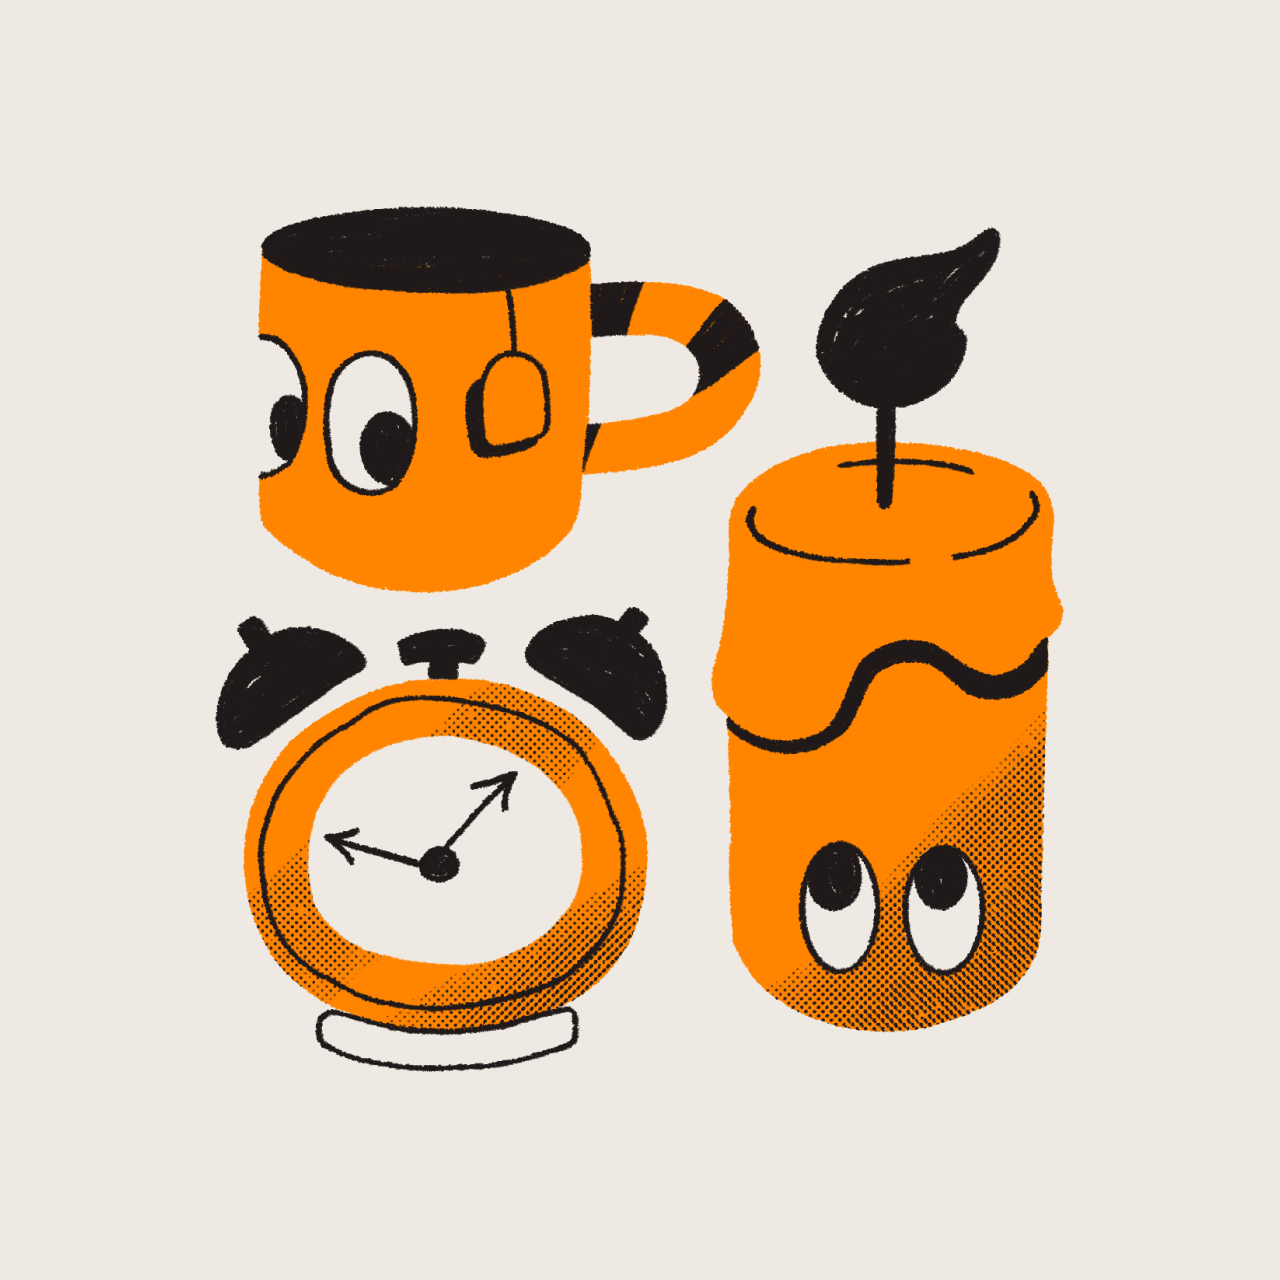 An illustration of an orange coffee mug, alarm clock, and candle